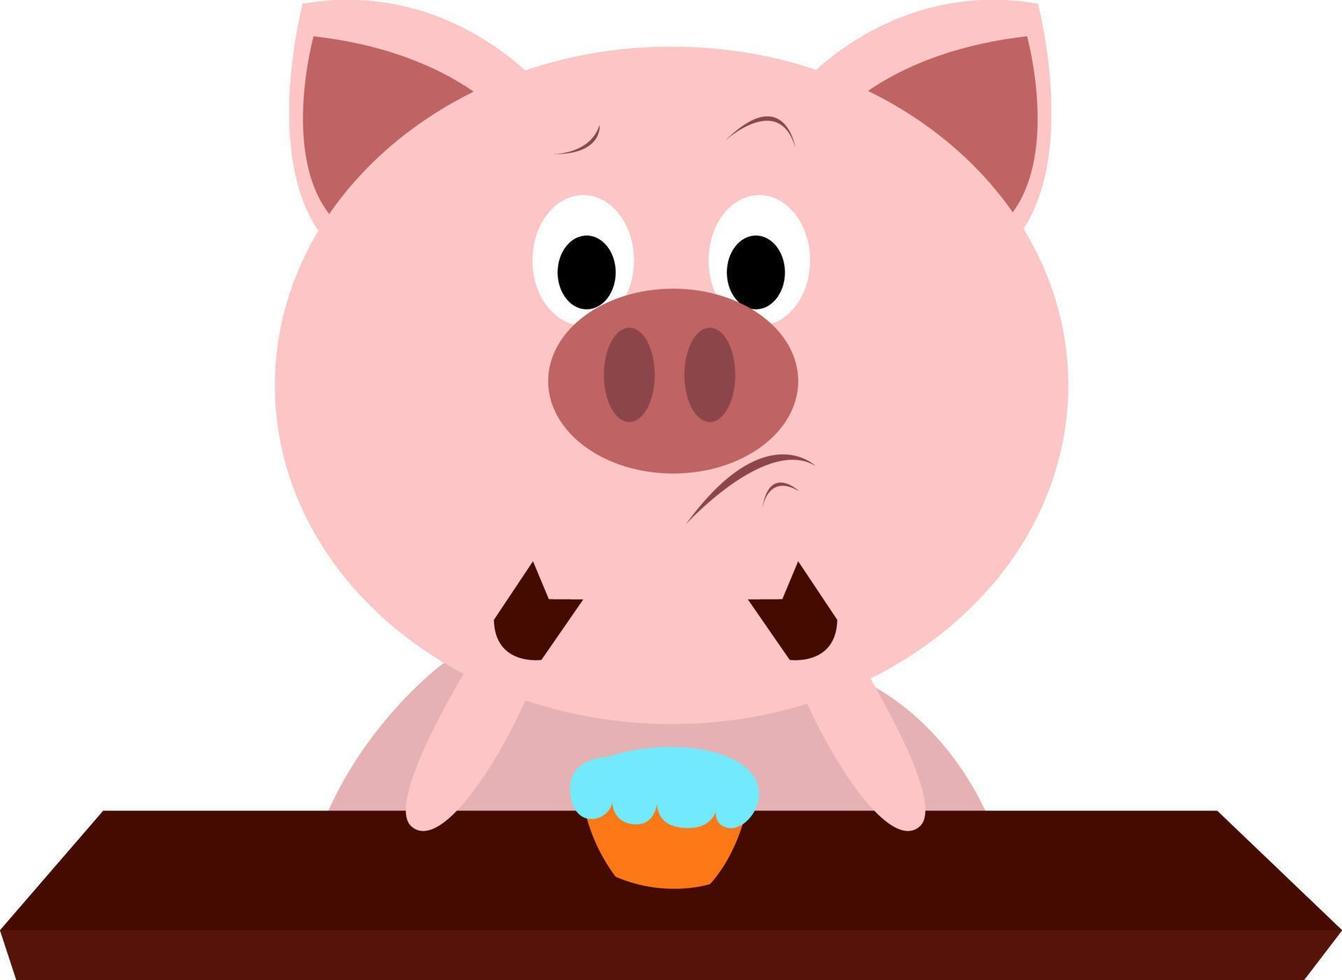 gris med cupcake, illustration, vektor på vit bakgrund.